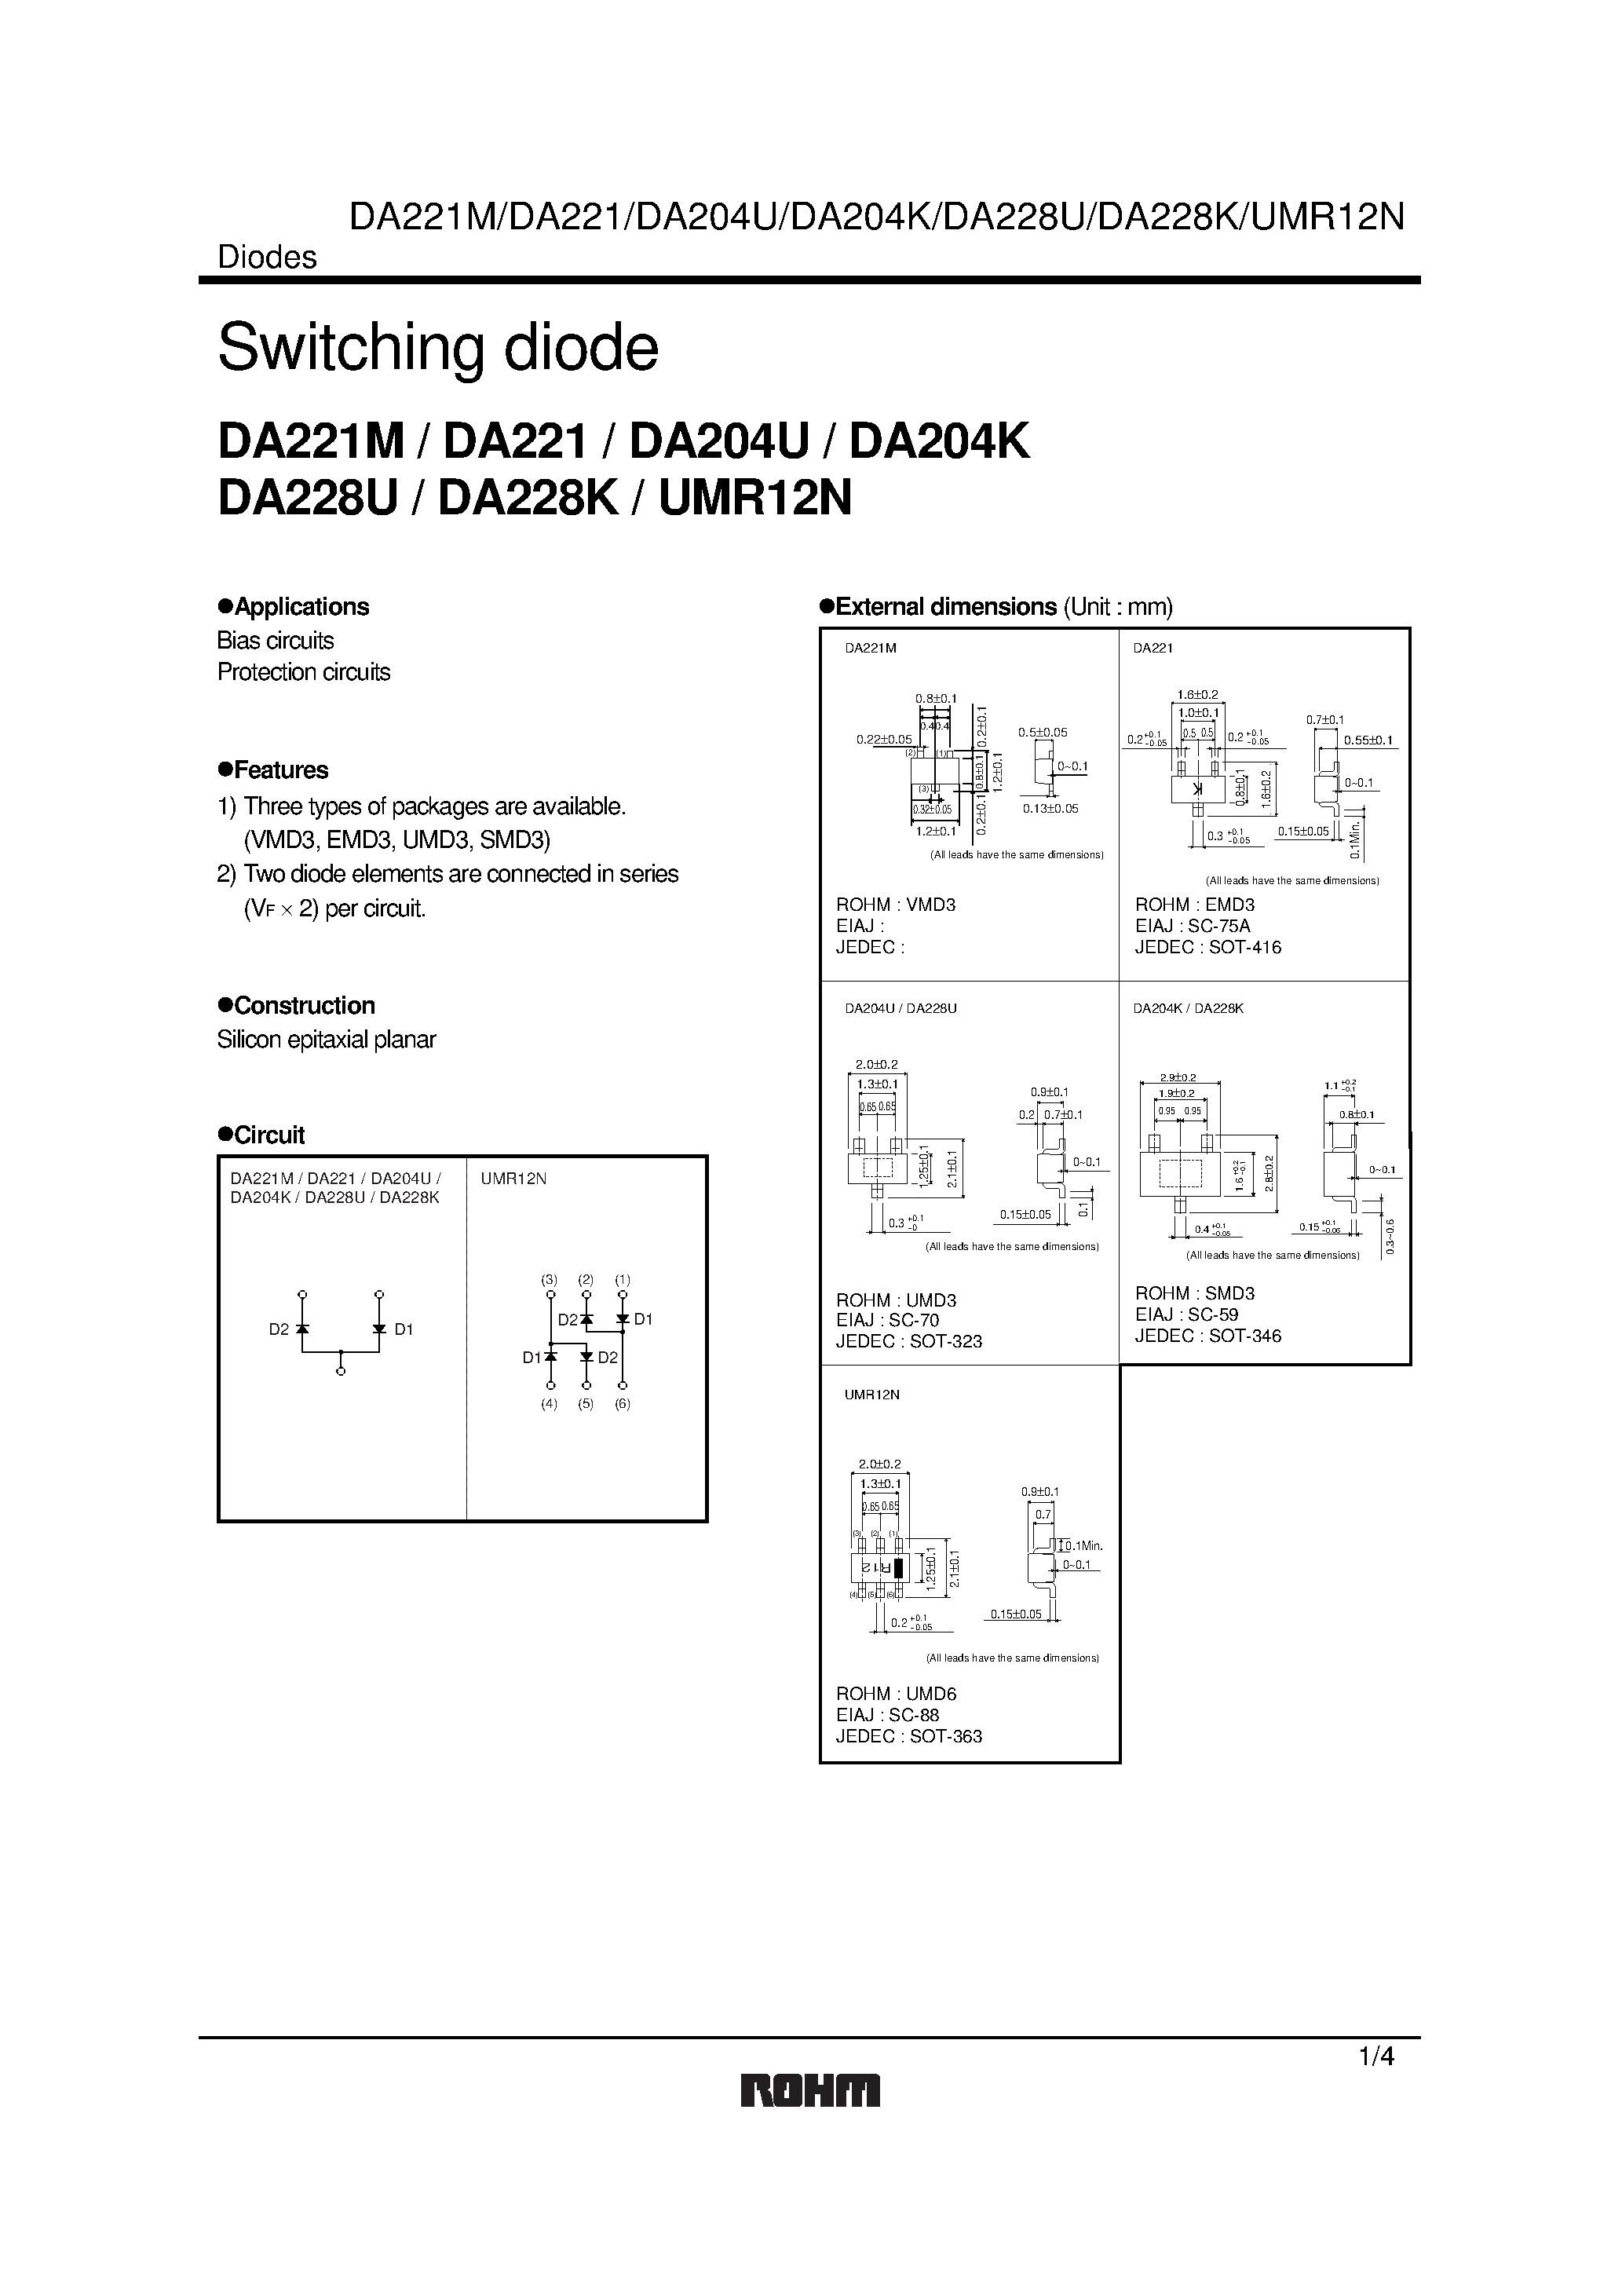 Даташит DA204U - Switching diode Silicon epitaxial planar страница 1